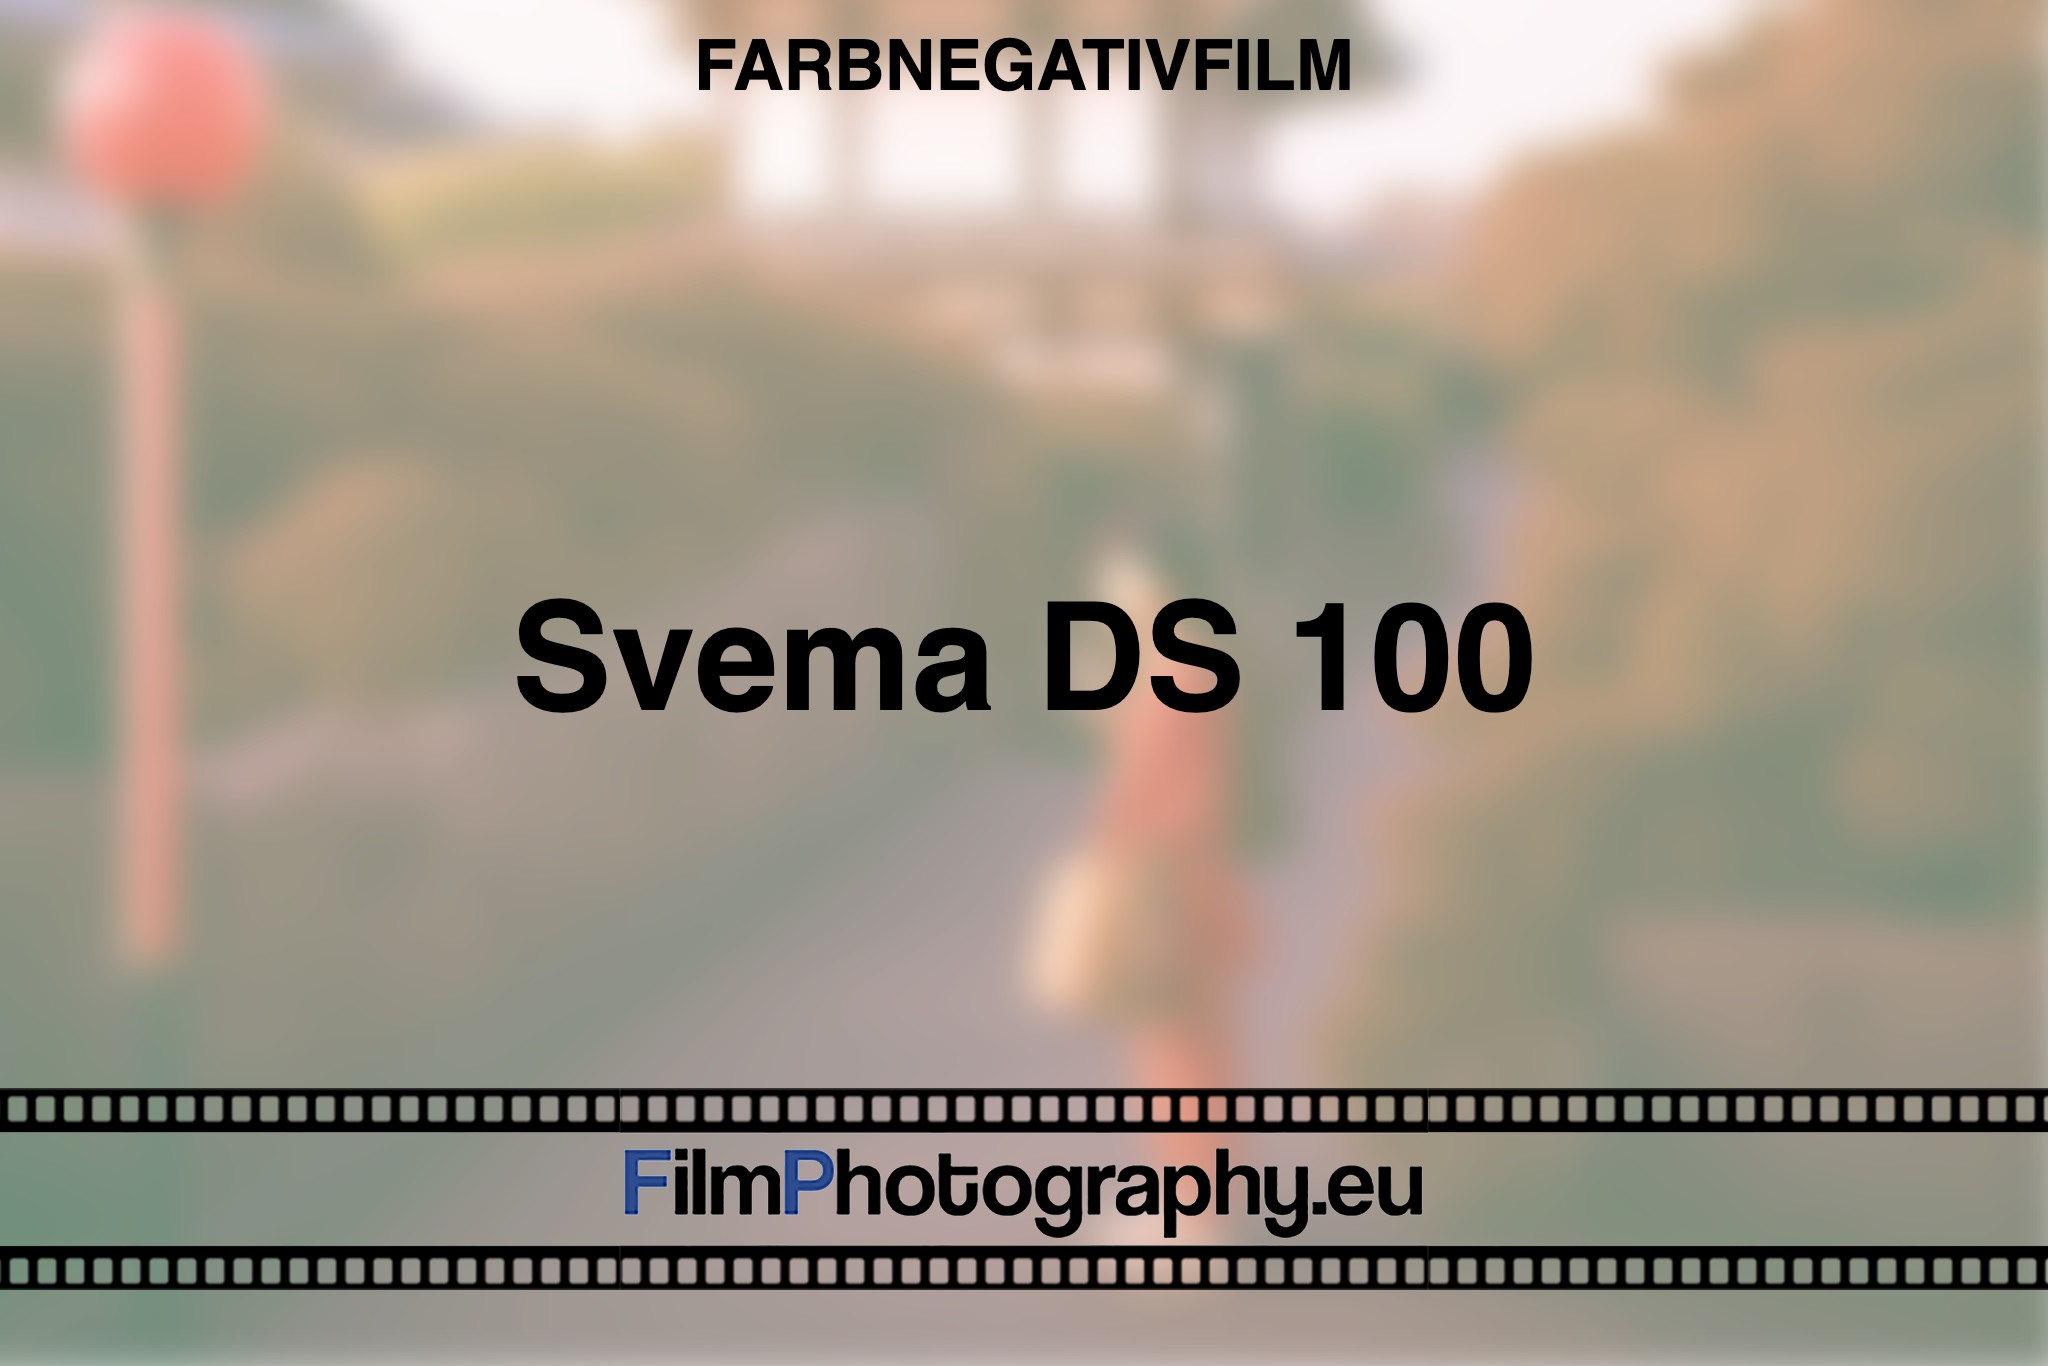 svema-ds-100-farbnegativfilm-bnv